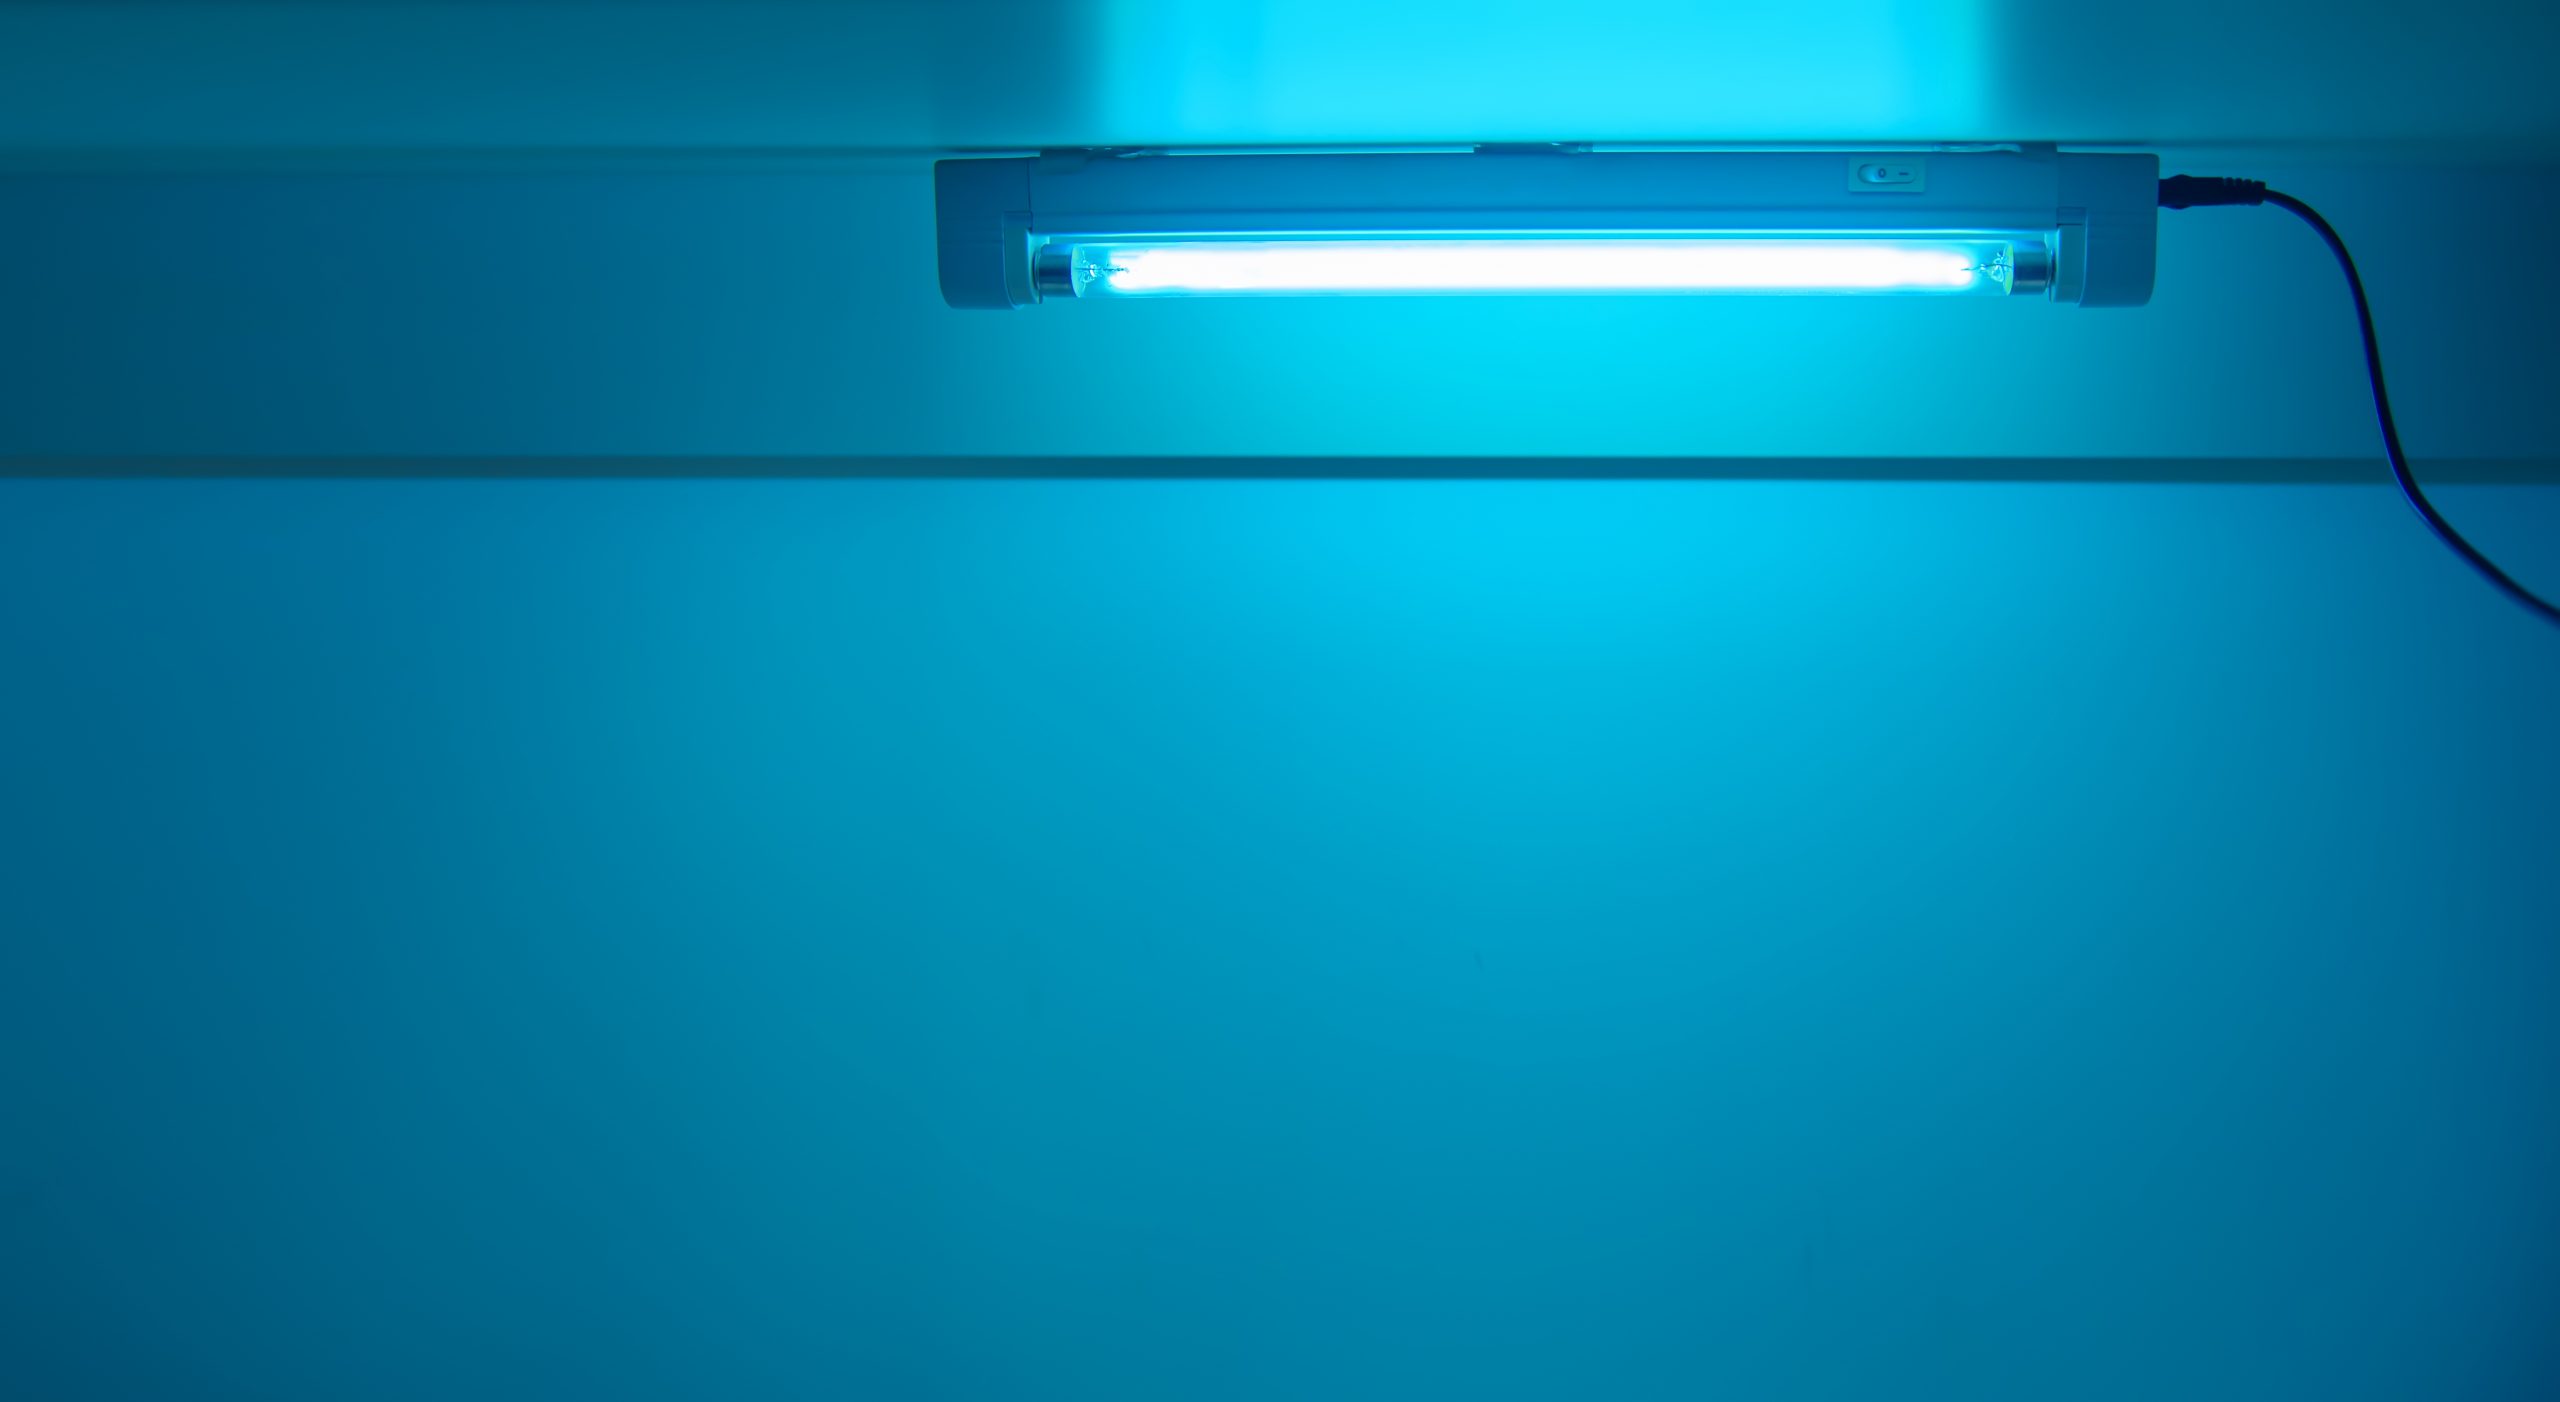 UV Lighting For Safer Living - Kills Bacteria, Fungus, Germs